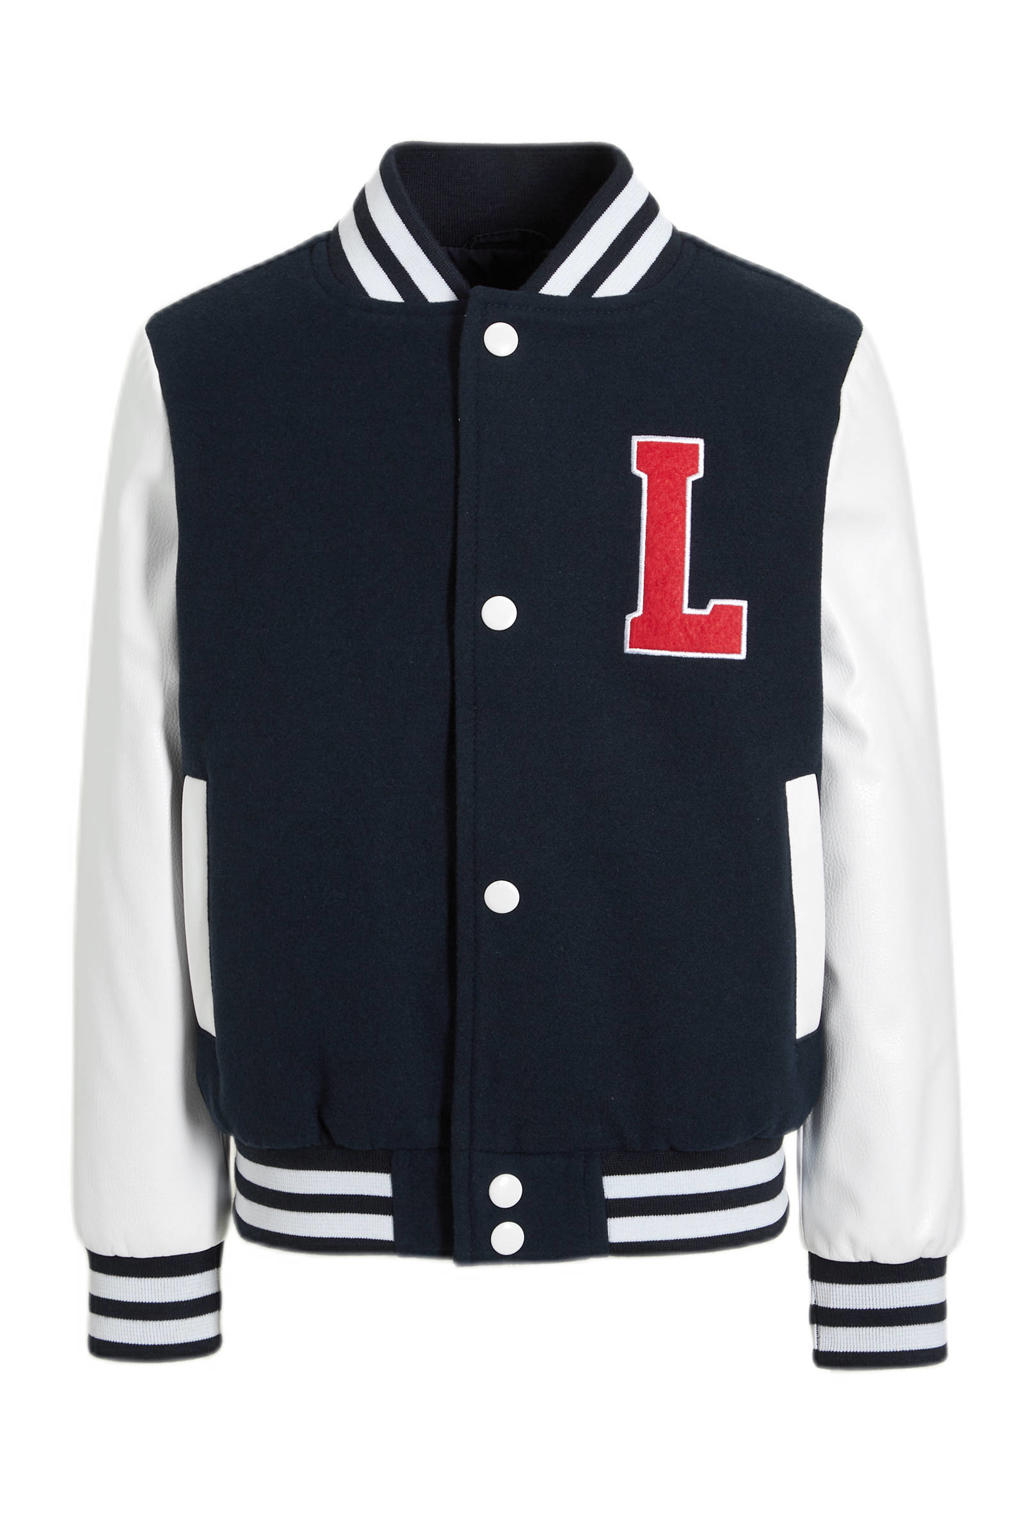 LTB Baseball jacket Fakiri donkerblauw/wit/rood